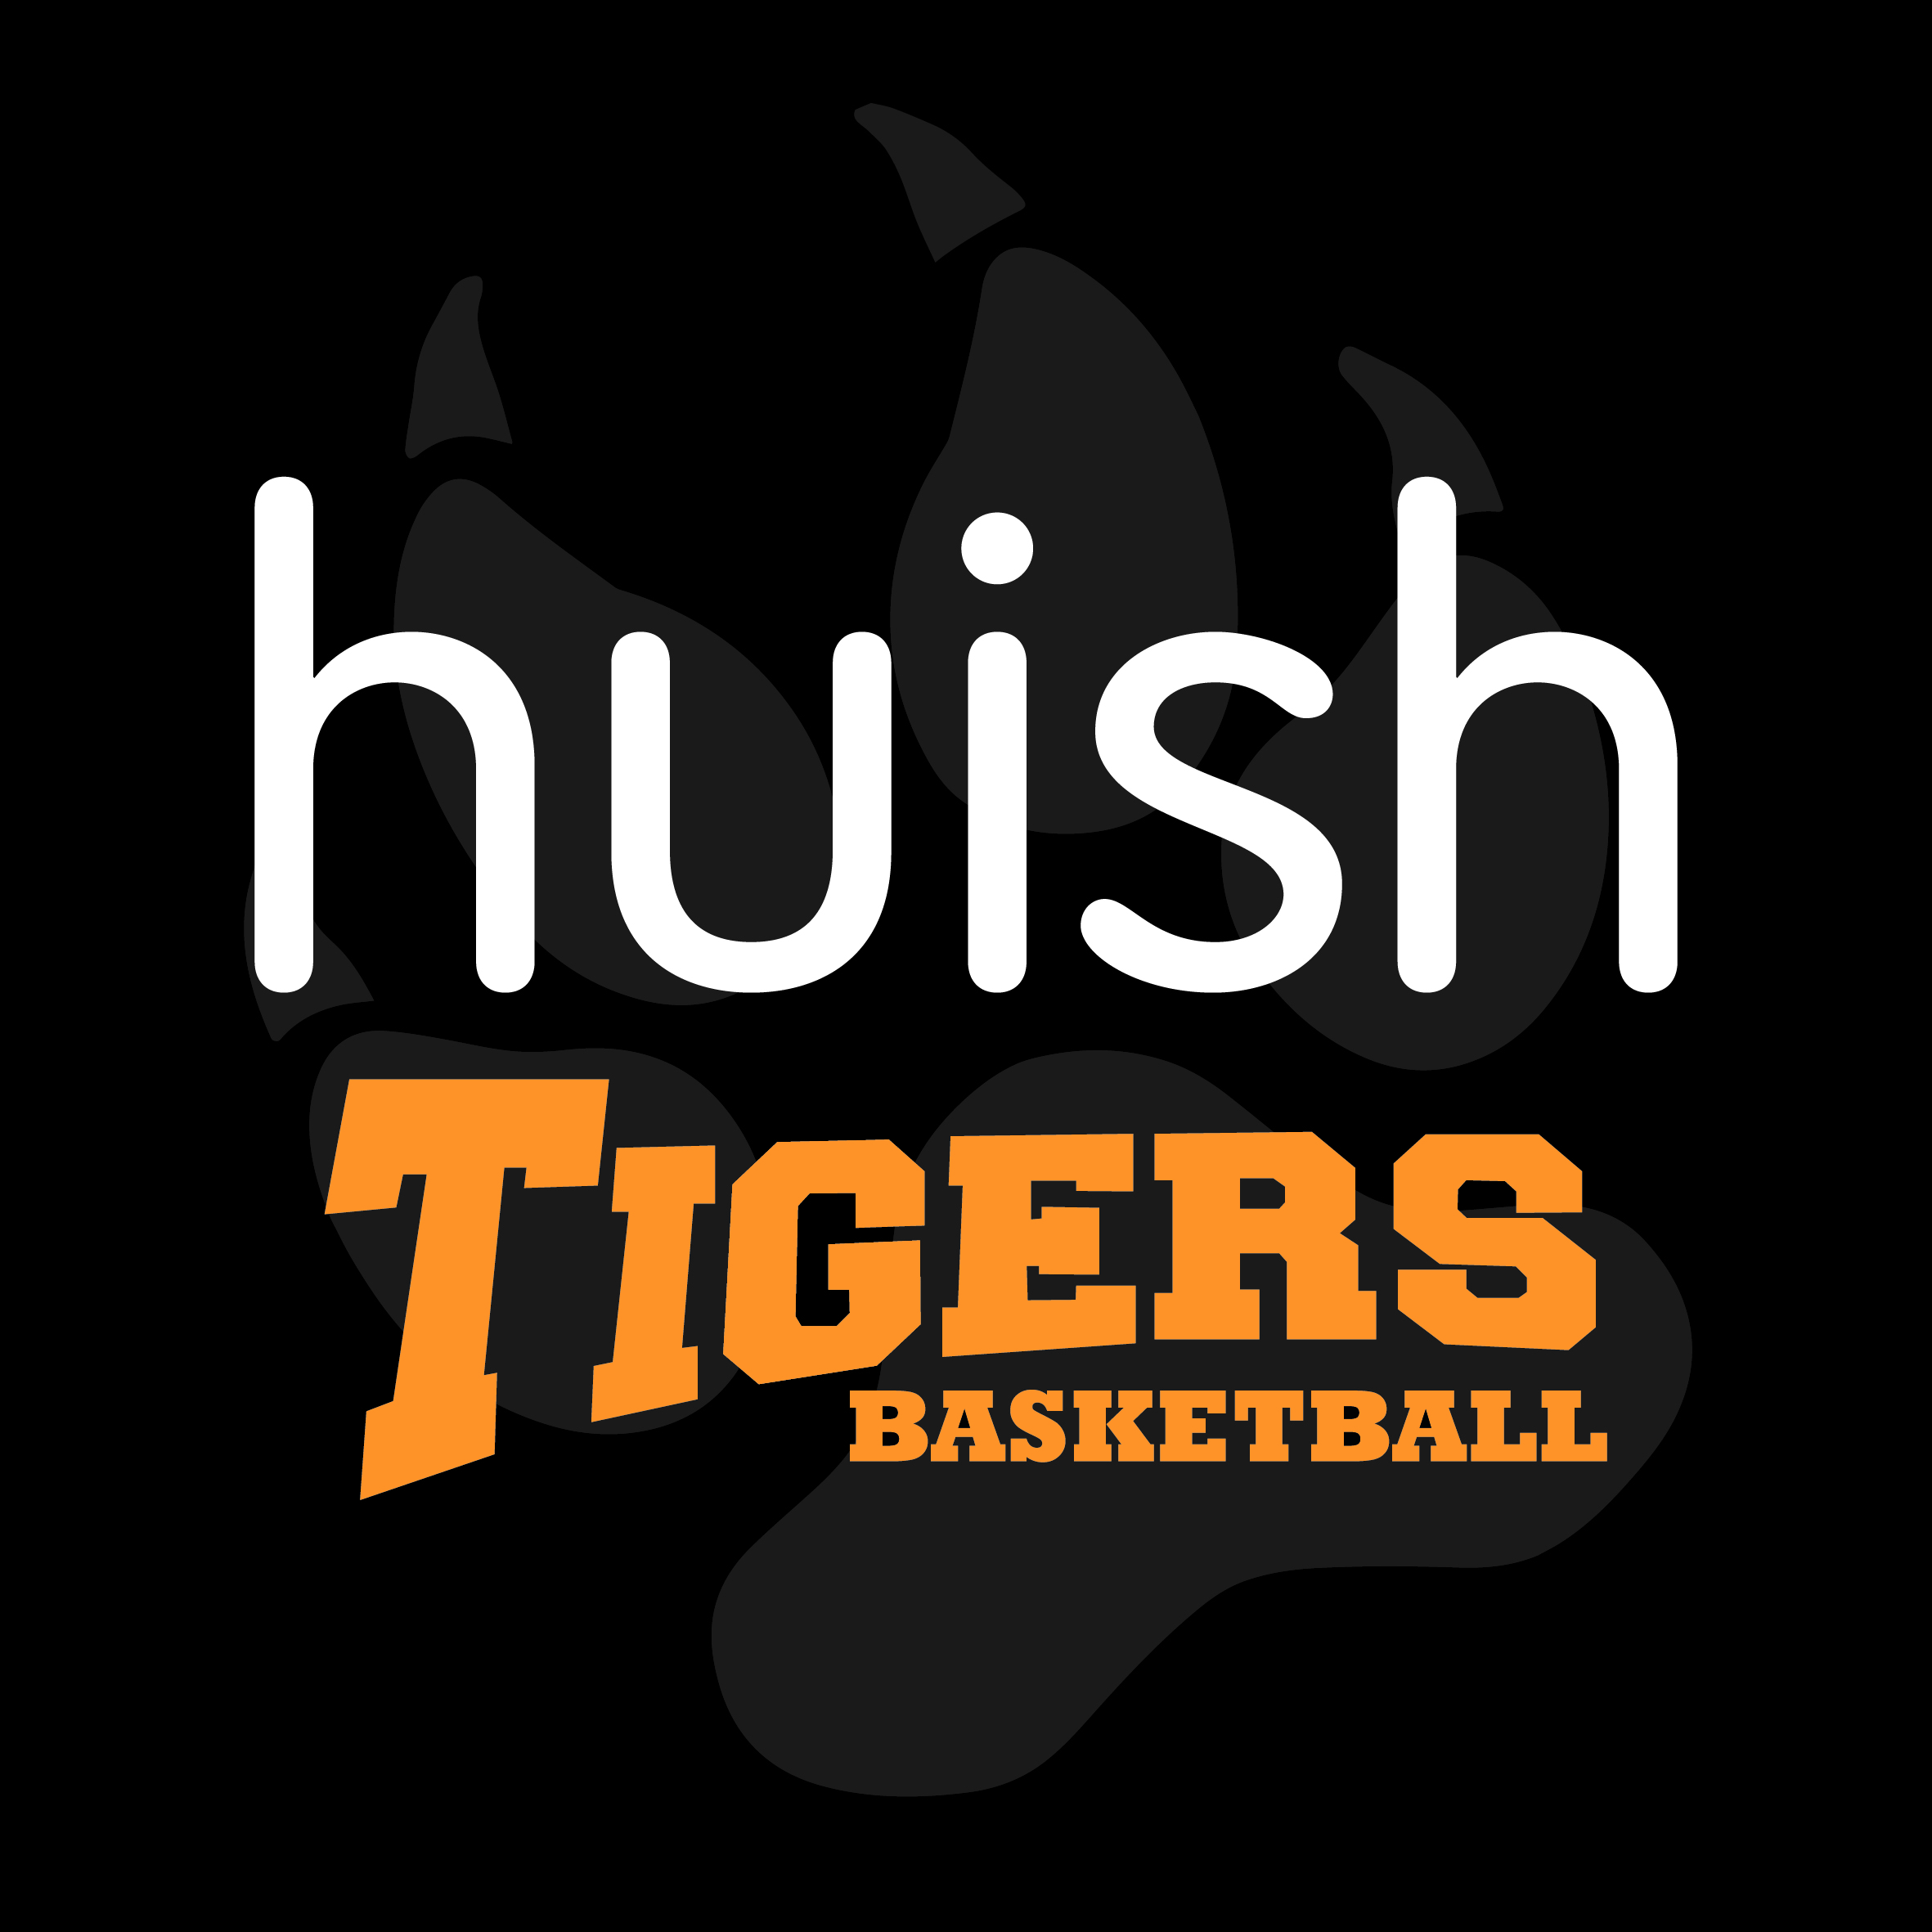 Huish Tigers Cubs Basketball aged 9-12